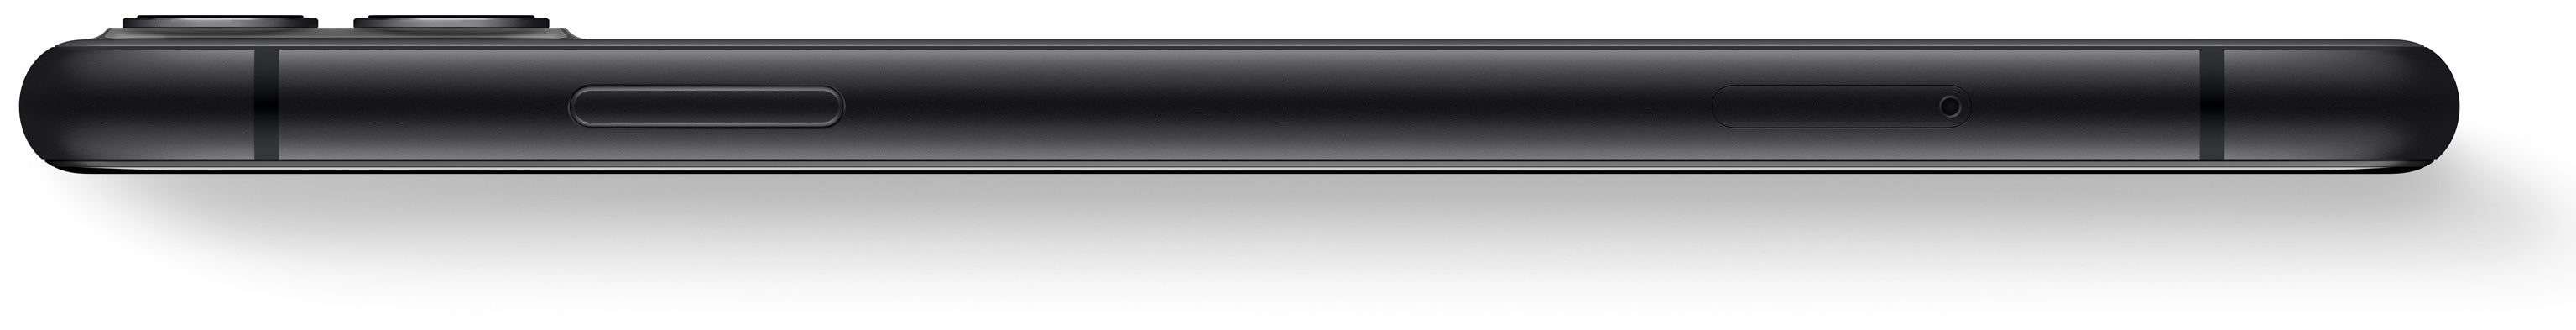 Apple iPhone 11 64gb Black EU - 5